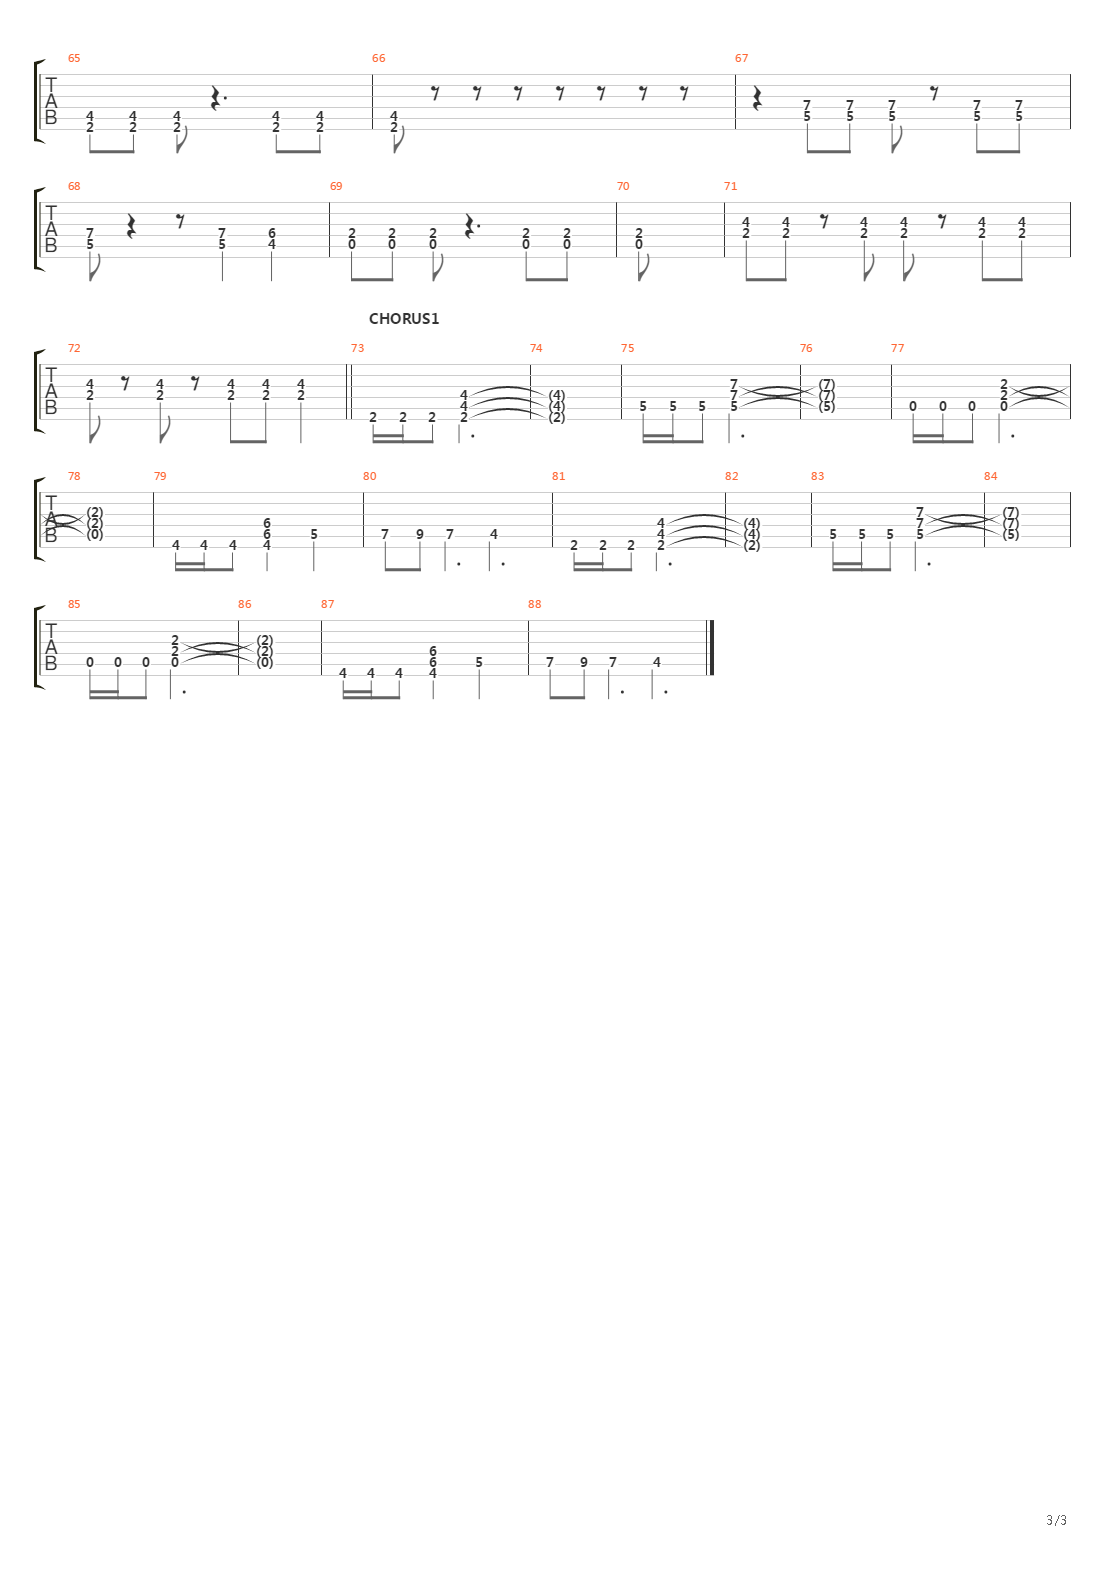 Jingle Bell Rock-Bobby Helms五线谱预览1-钢琴谱文件（五线谱、双手简谱、数字谱、Midi、PDF）免费下载